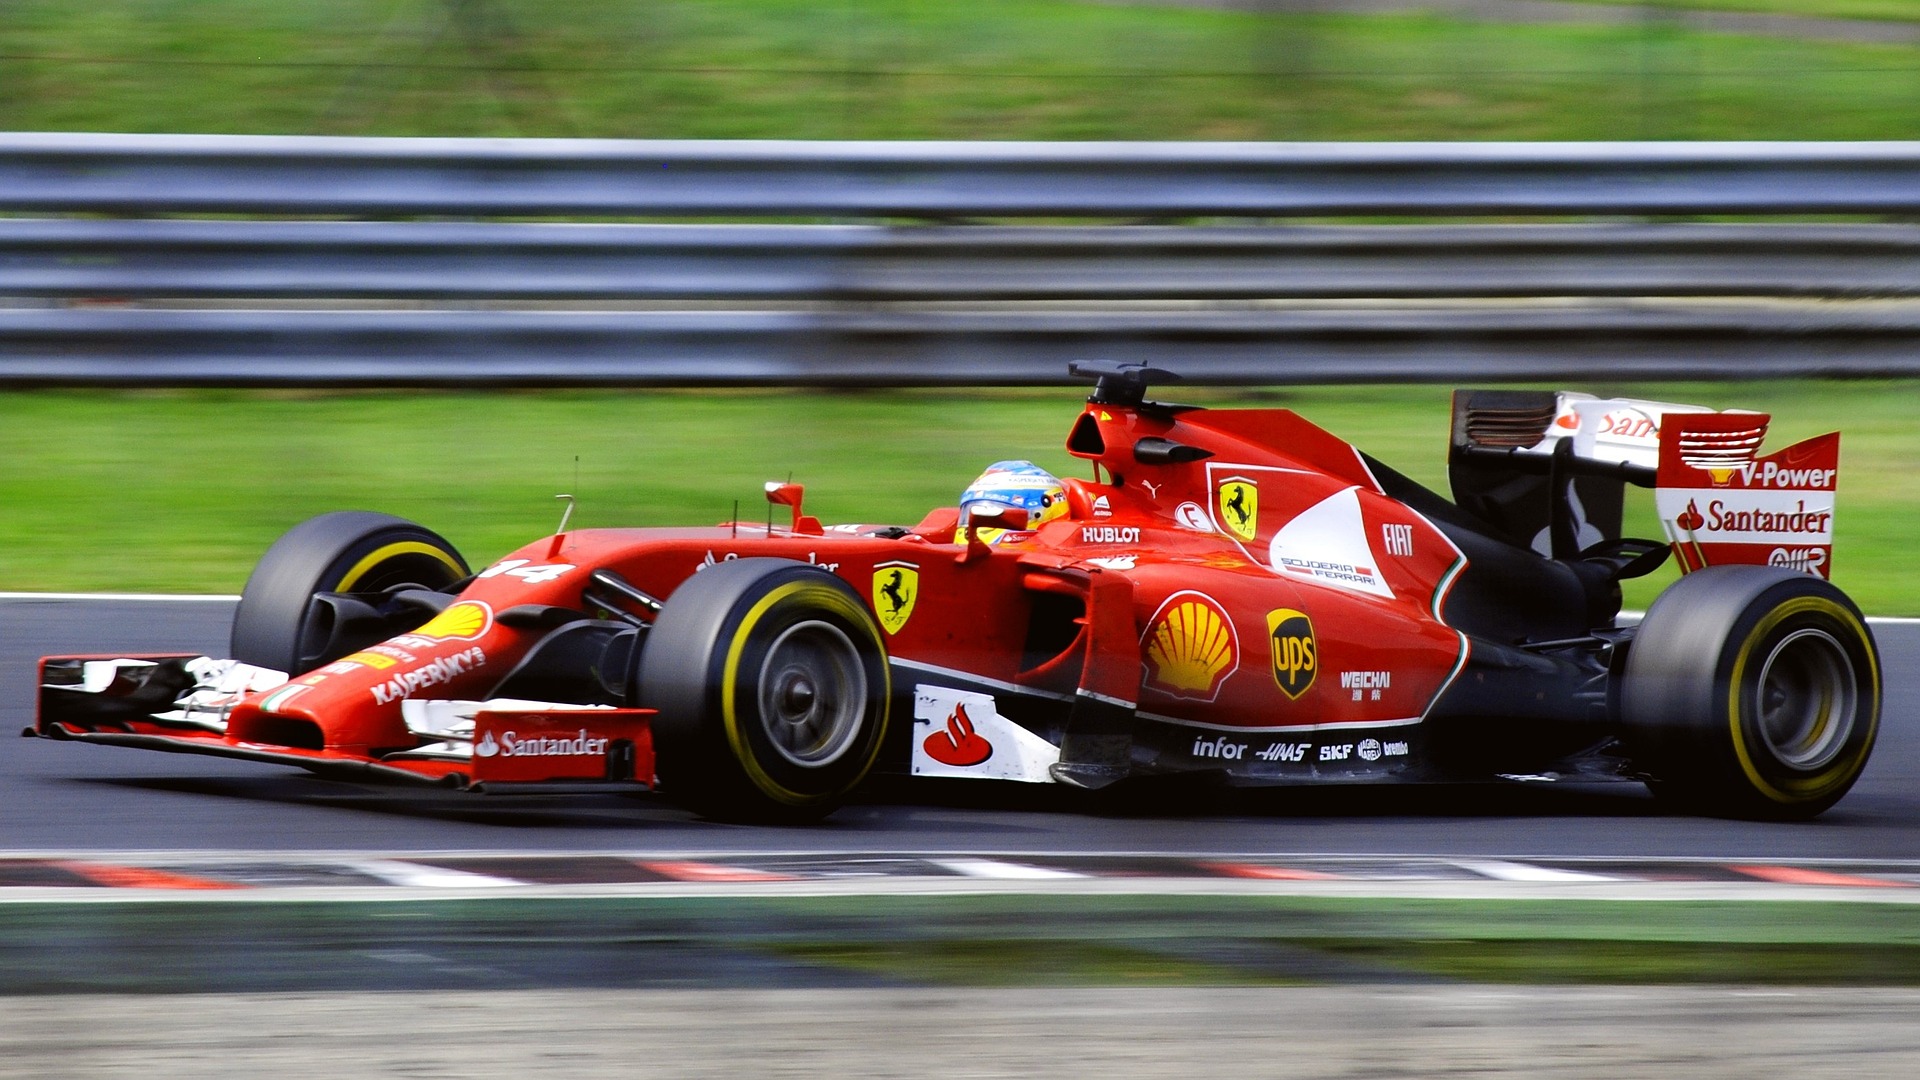 Ferrari, ok alla partnership con Asahi Europe & International